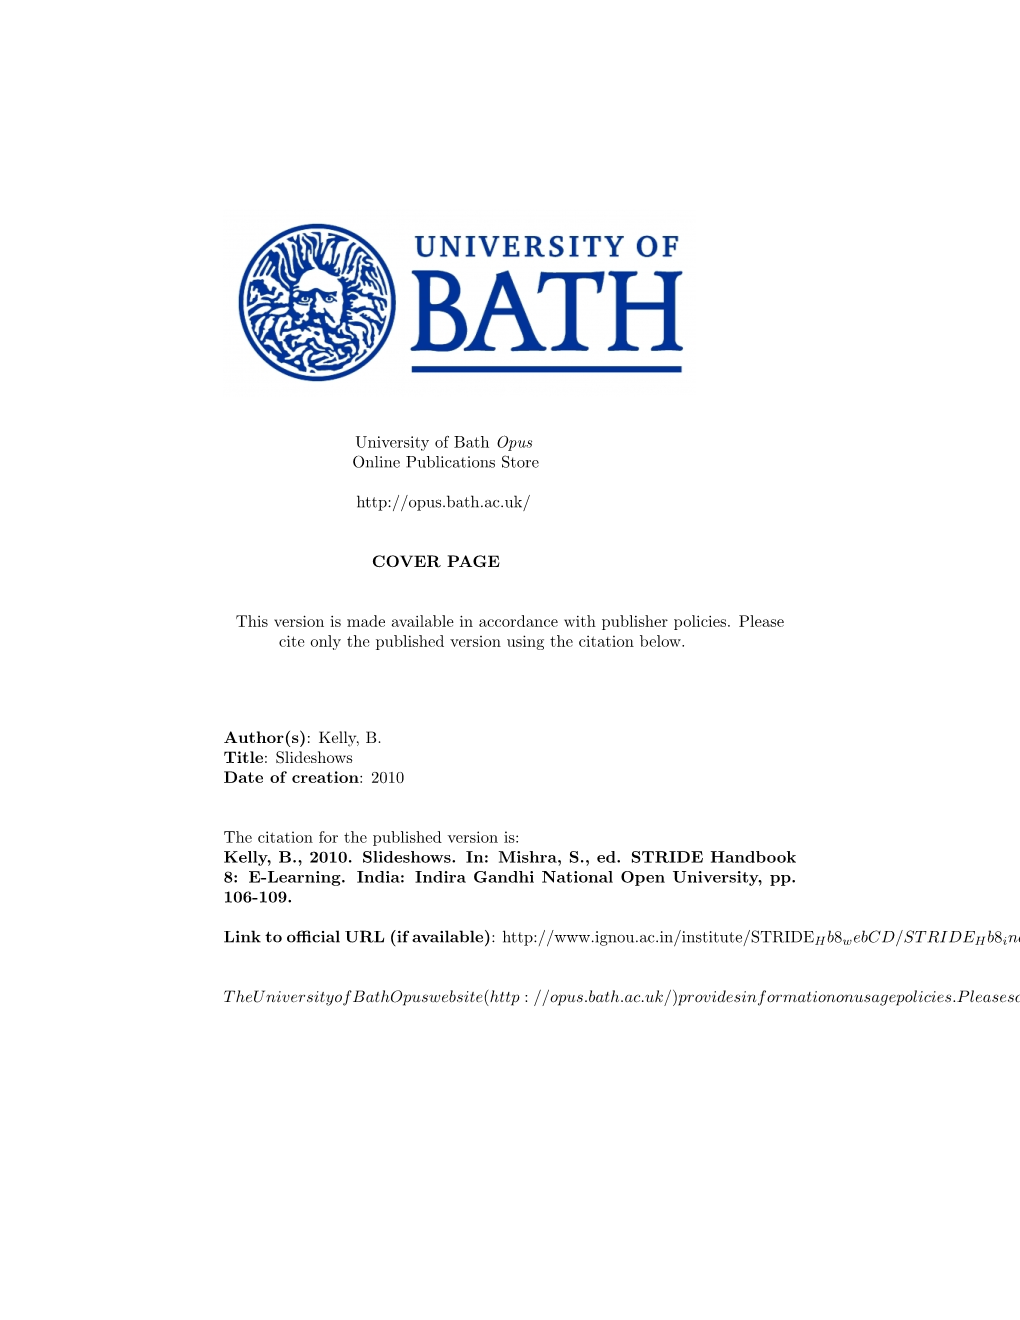 University of Bath Opus Online Publications Store